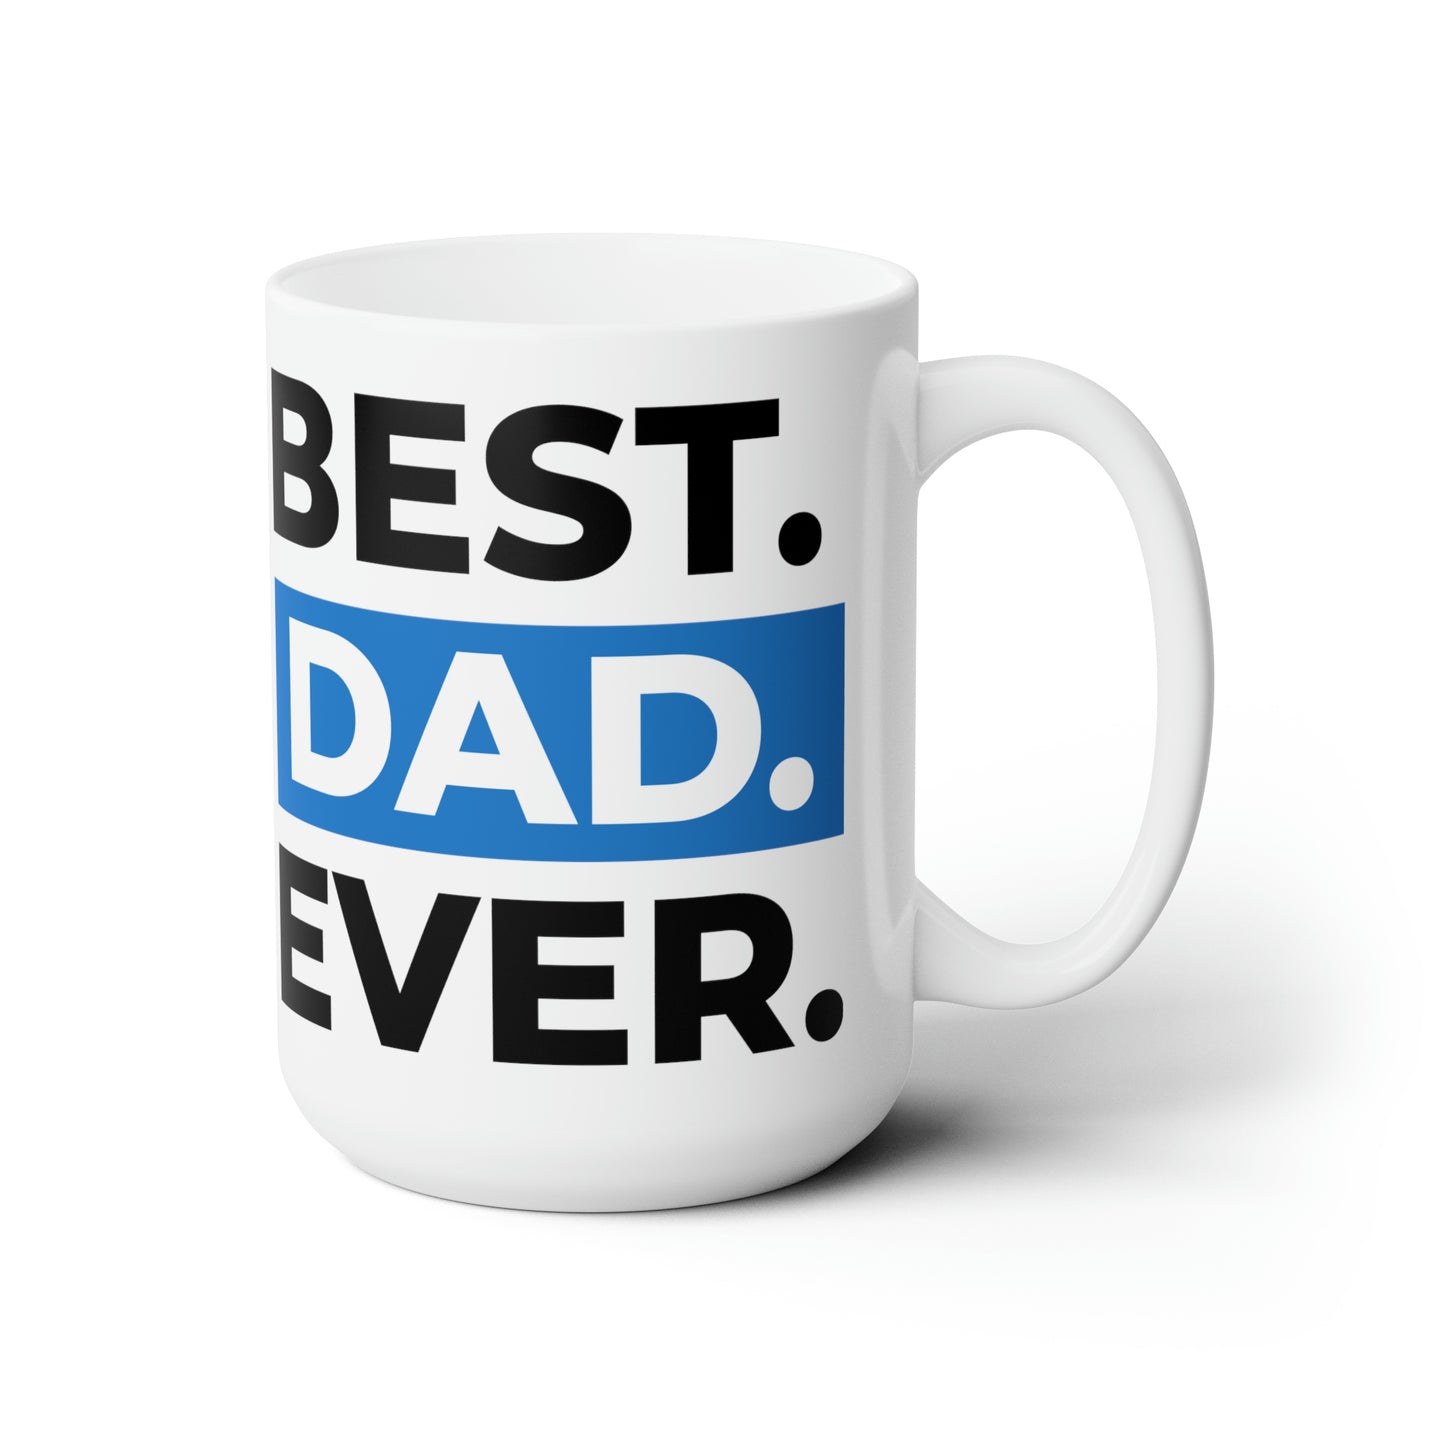 Best. Dad. Ever. Mug